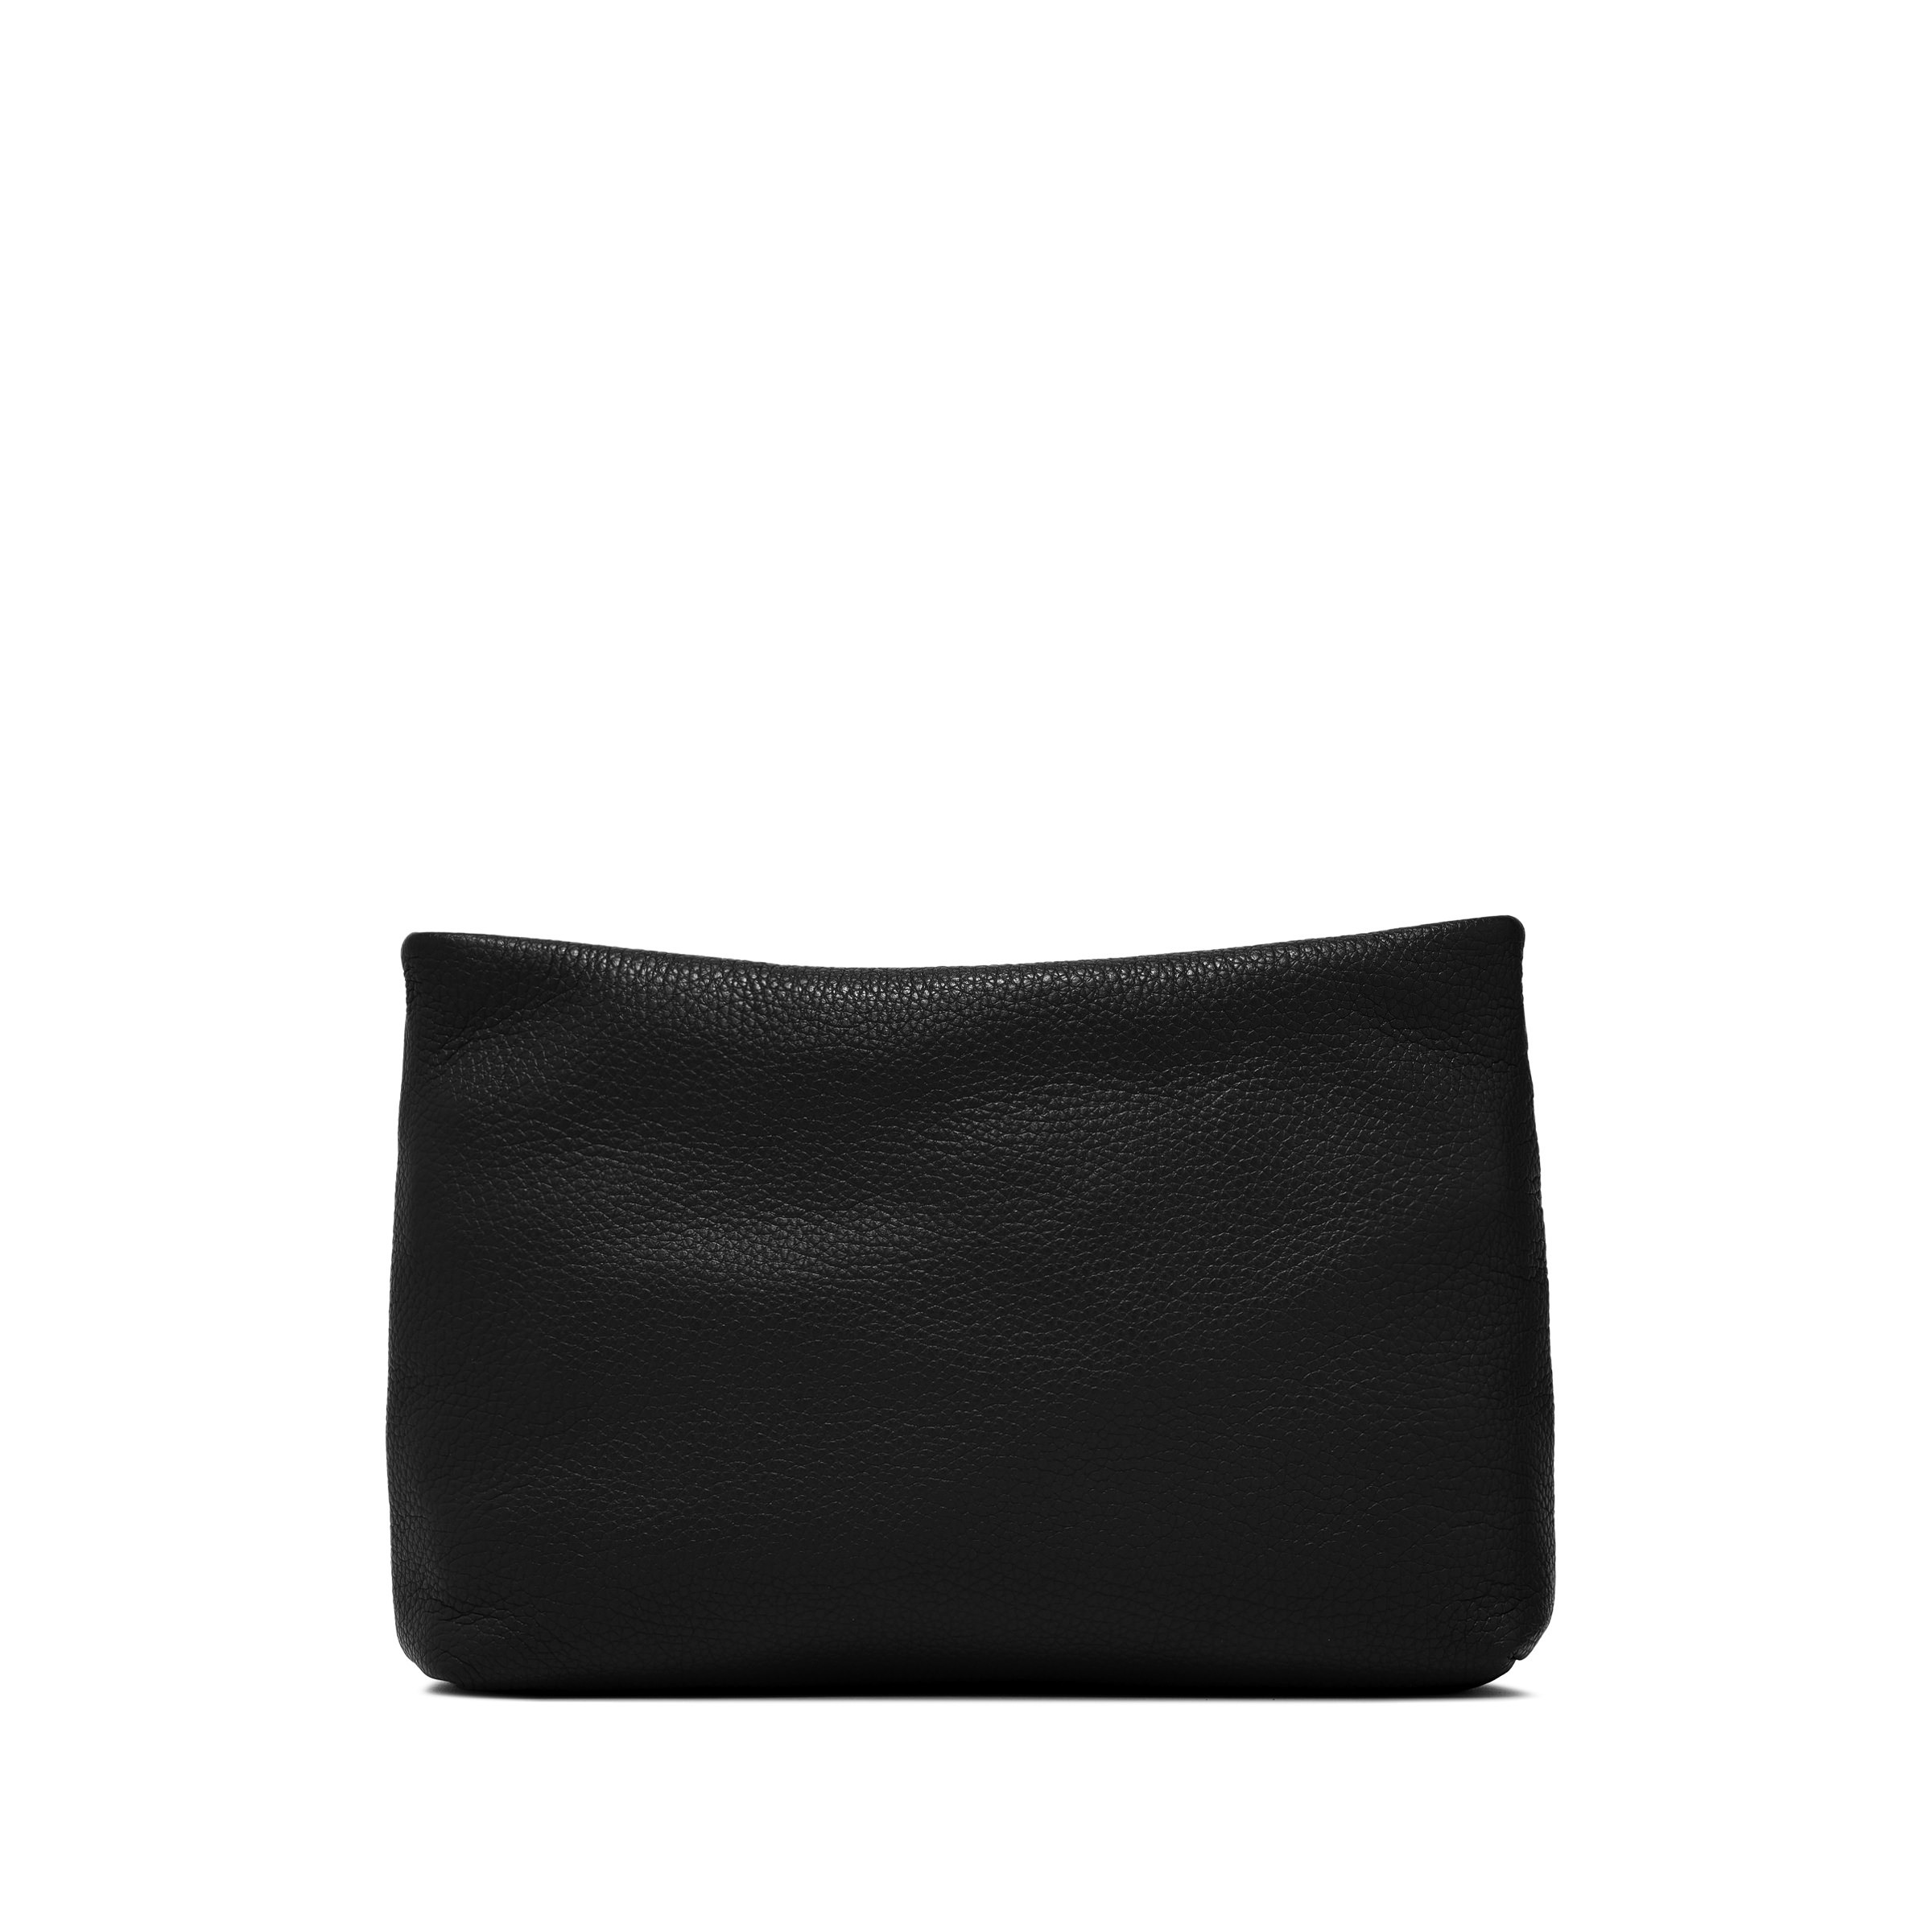 Gianni Chiarini - Brenda leather bag, Black, large image number 2